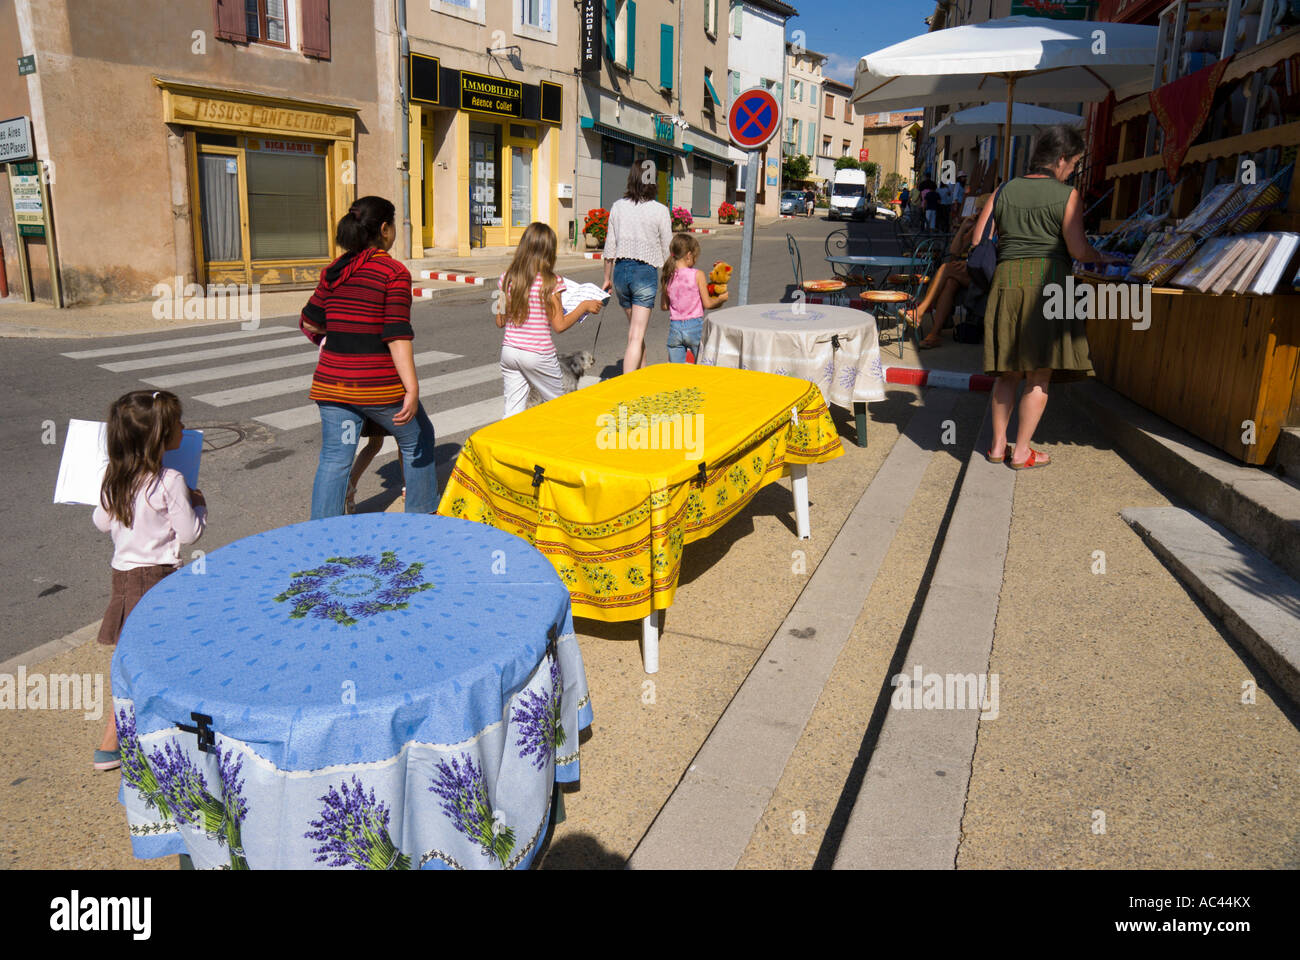 Town centre Sault France Provence Provençal fabric tablecloths for sale Stock Photo